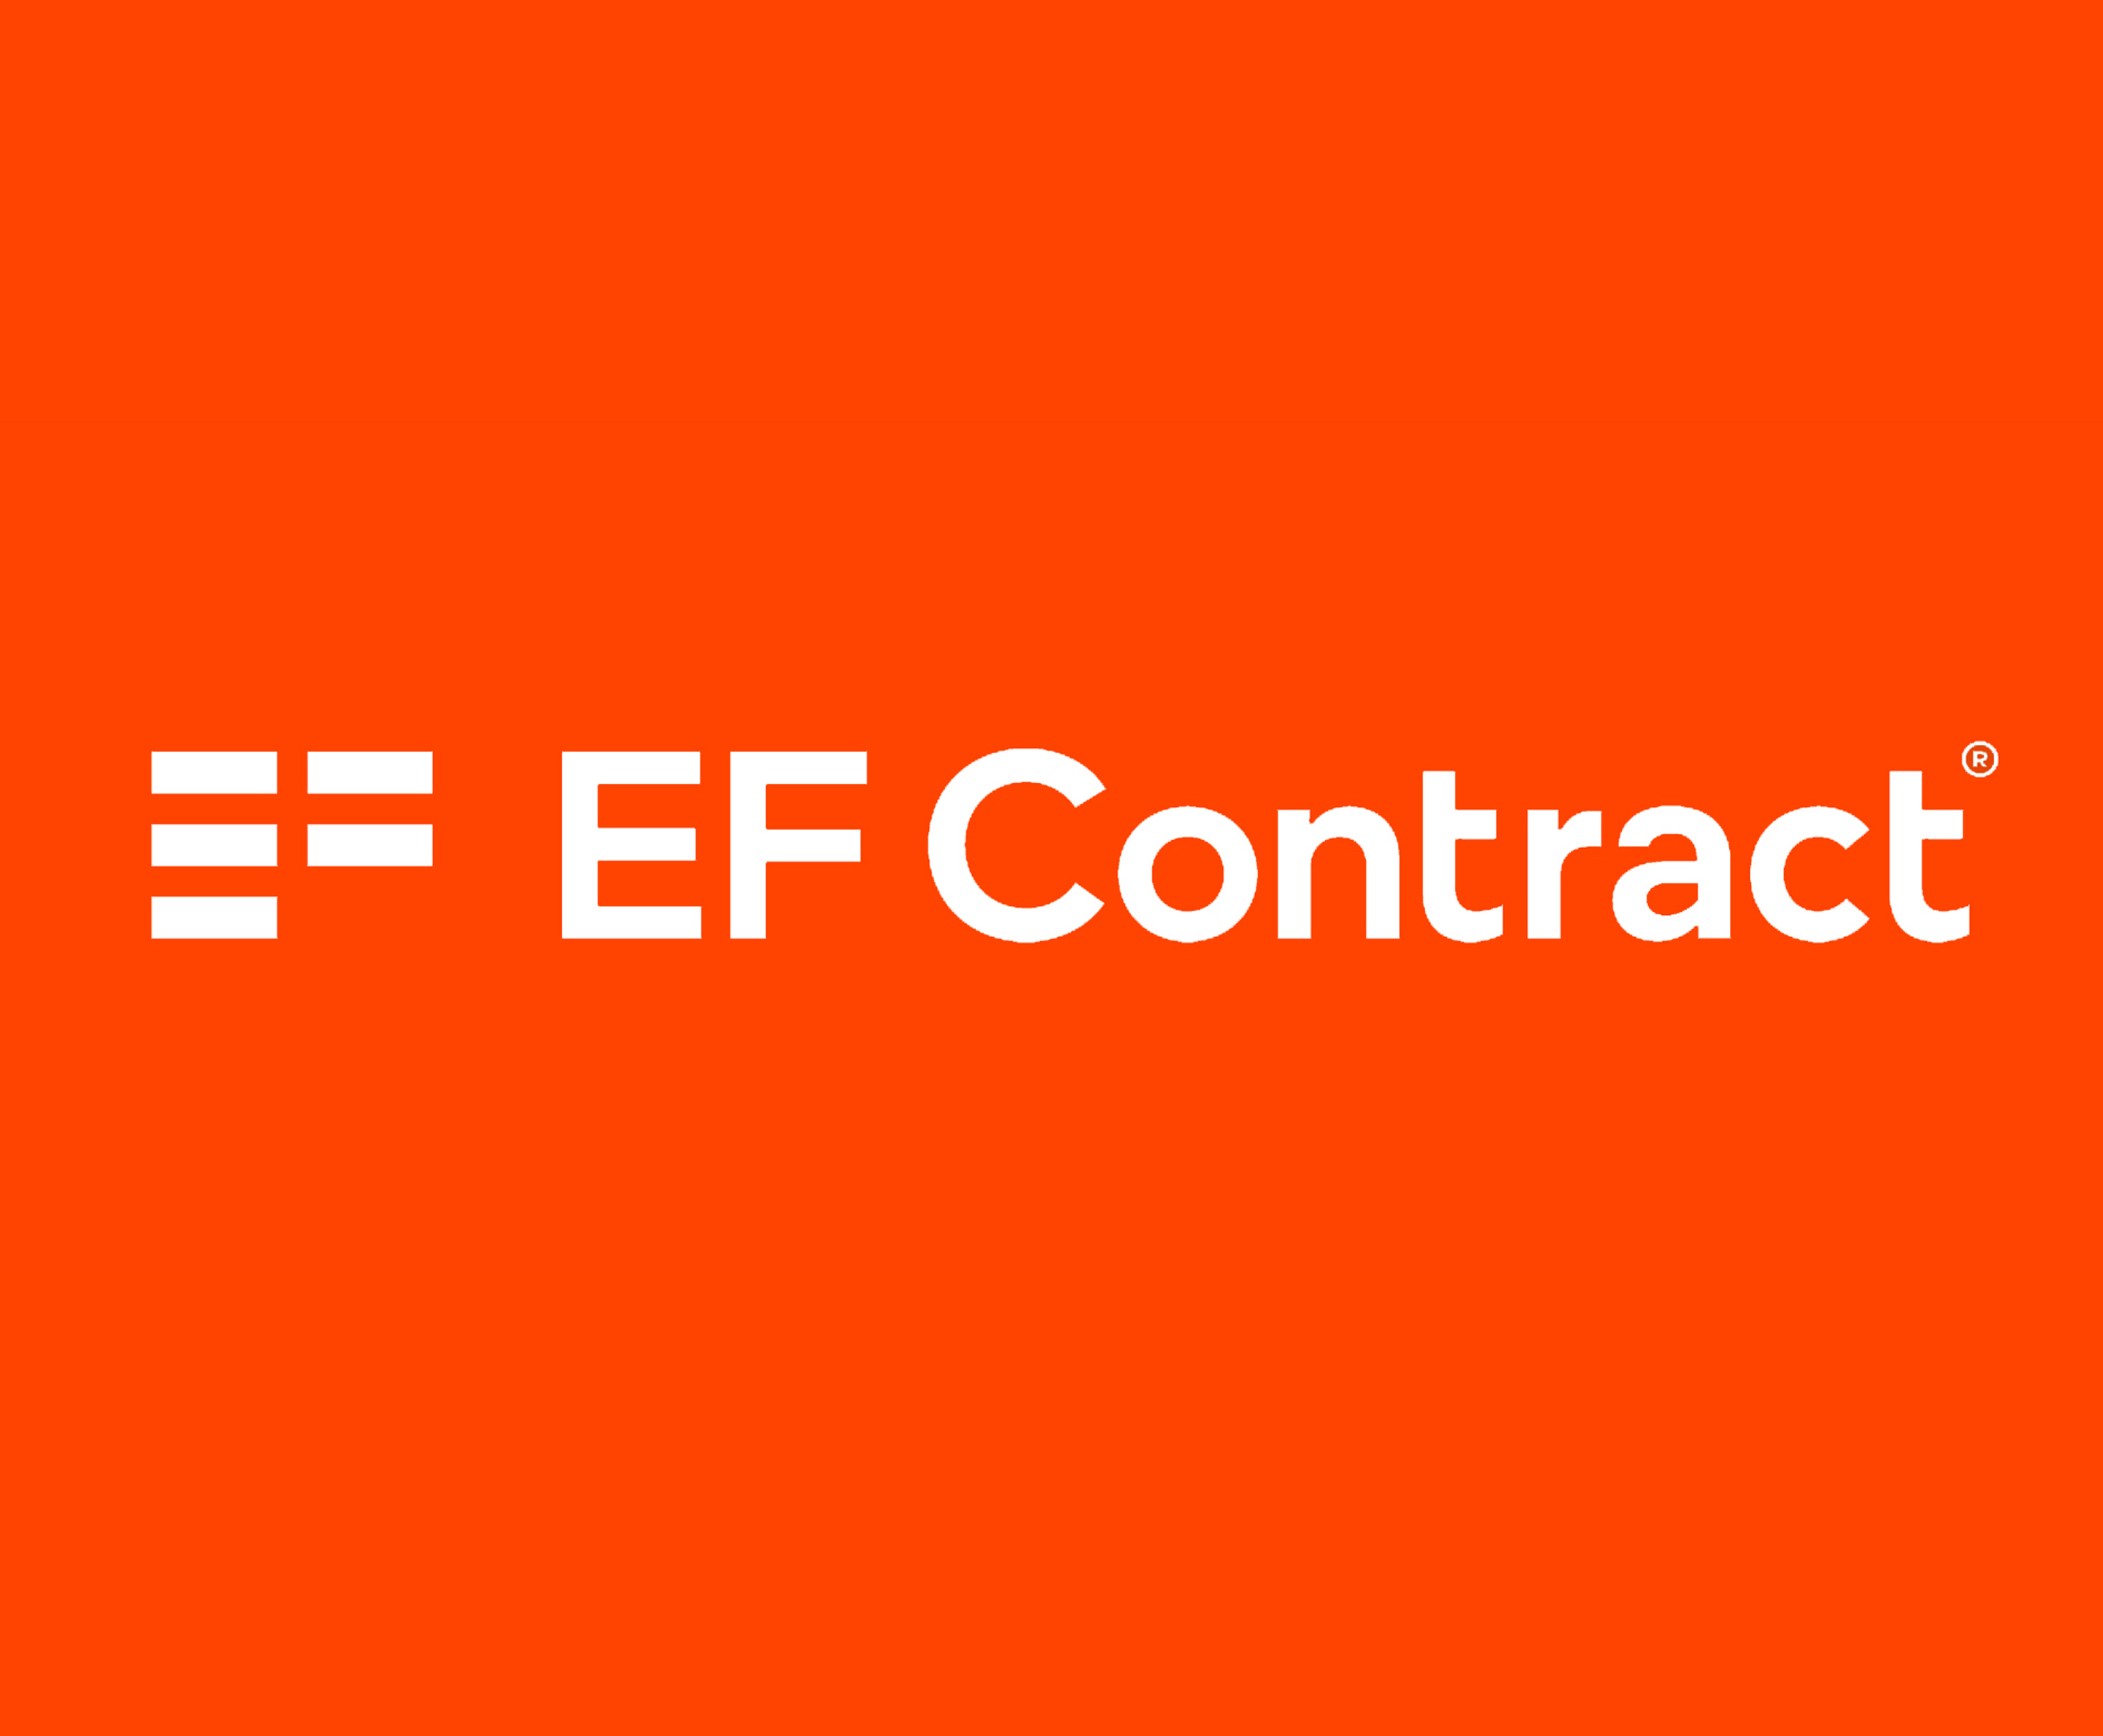 Web_EF Contract